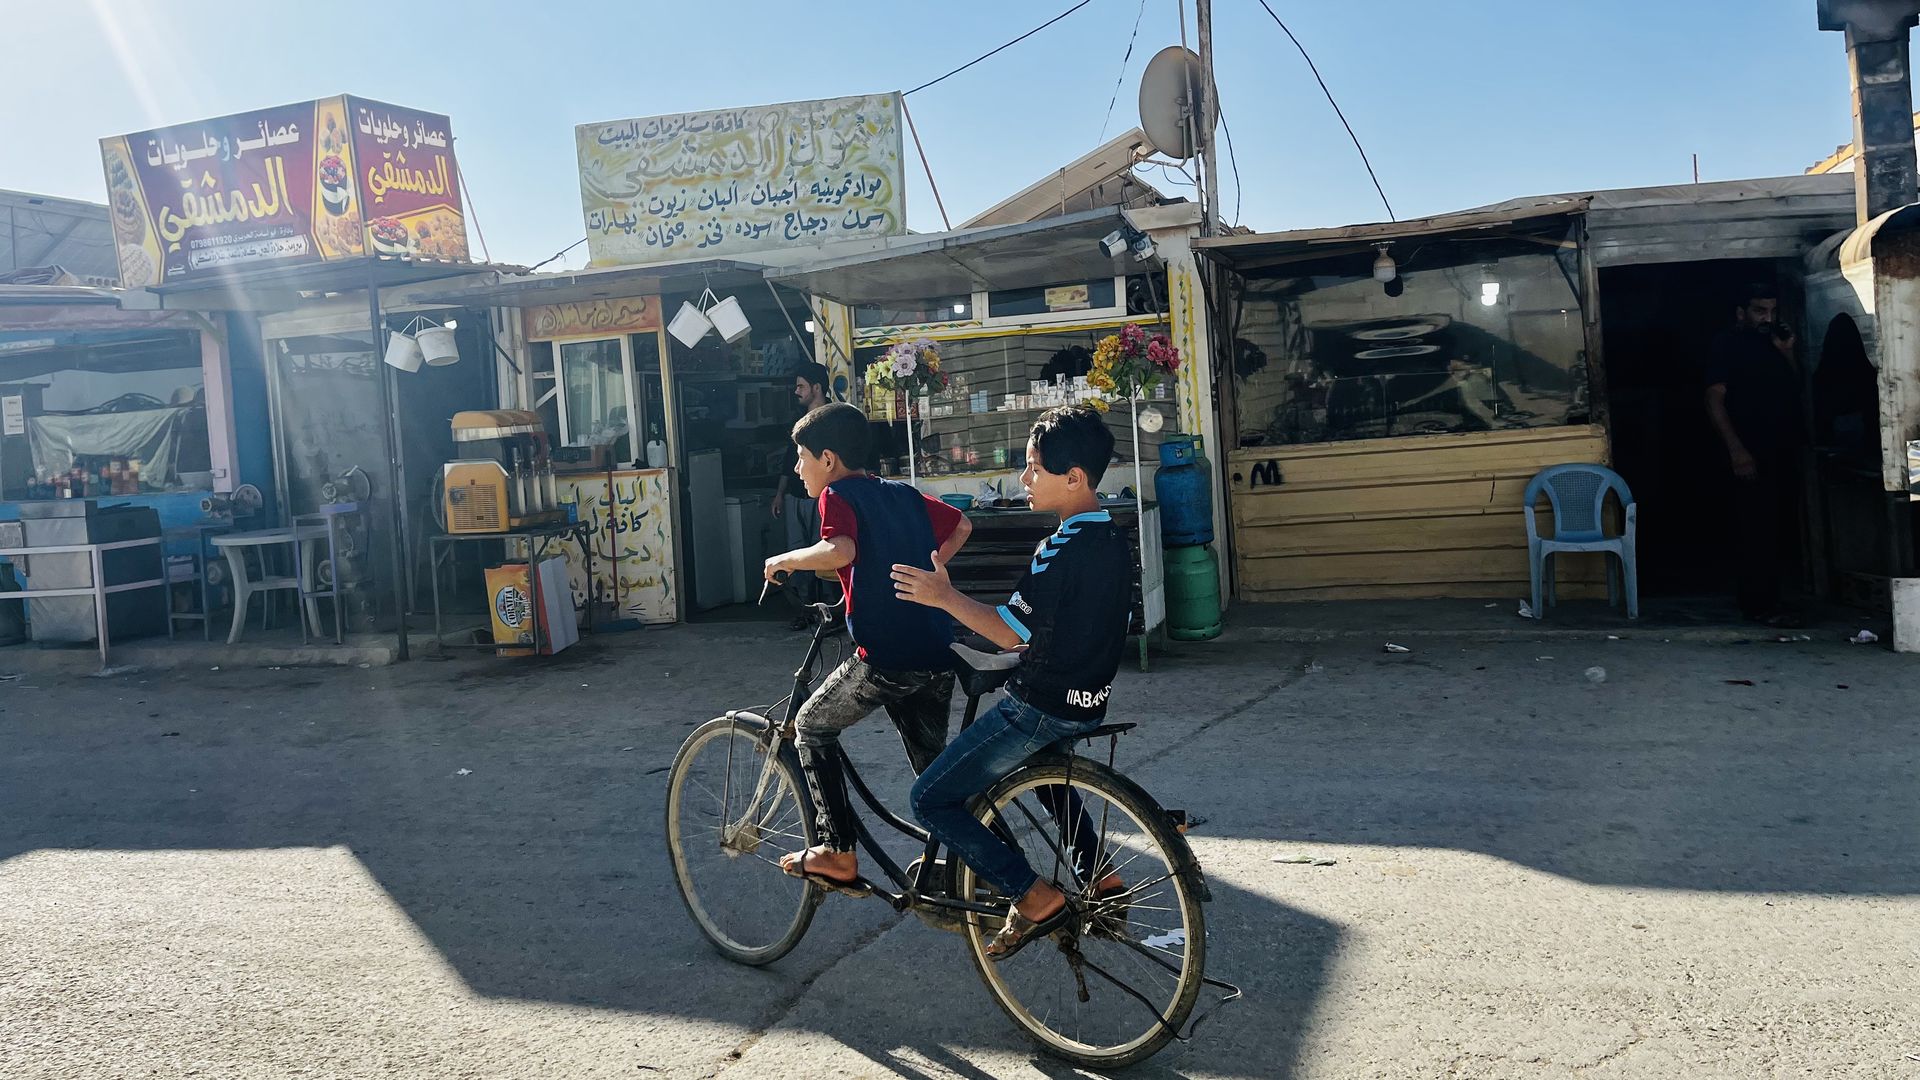 Two Syrian refugee boys ride bikes down a street in Zaatari Refugee Camp in Jordan